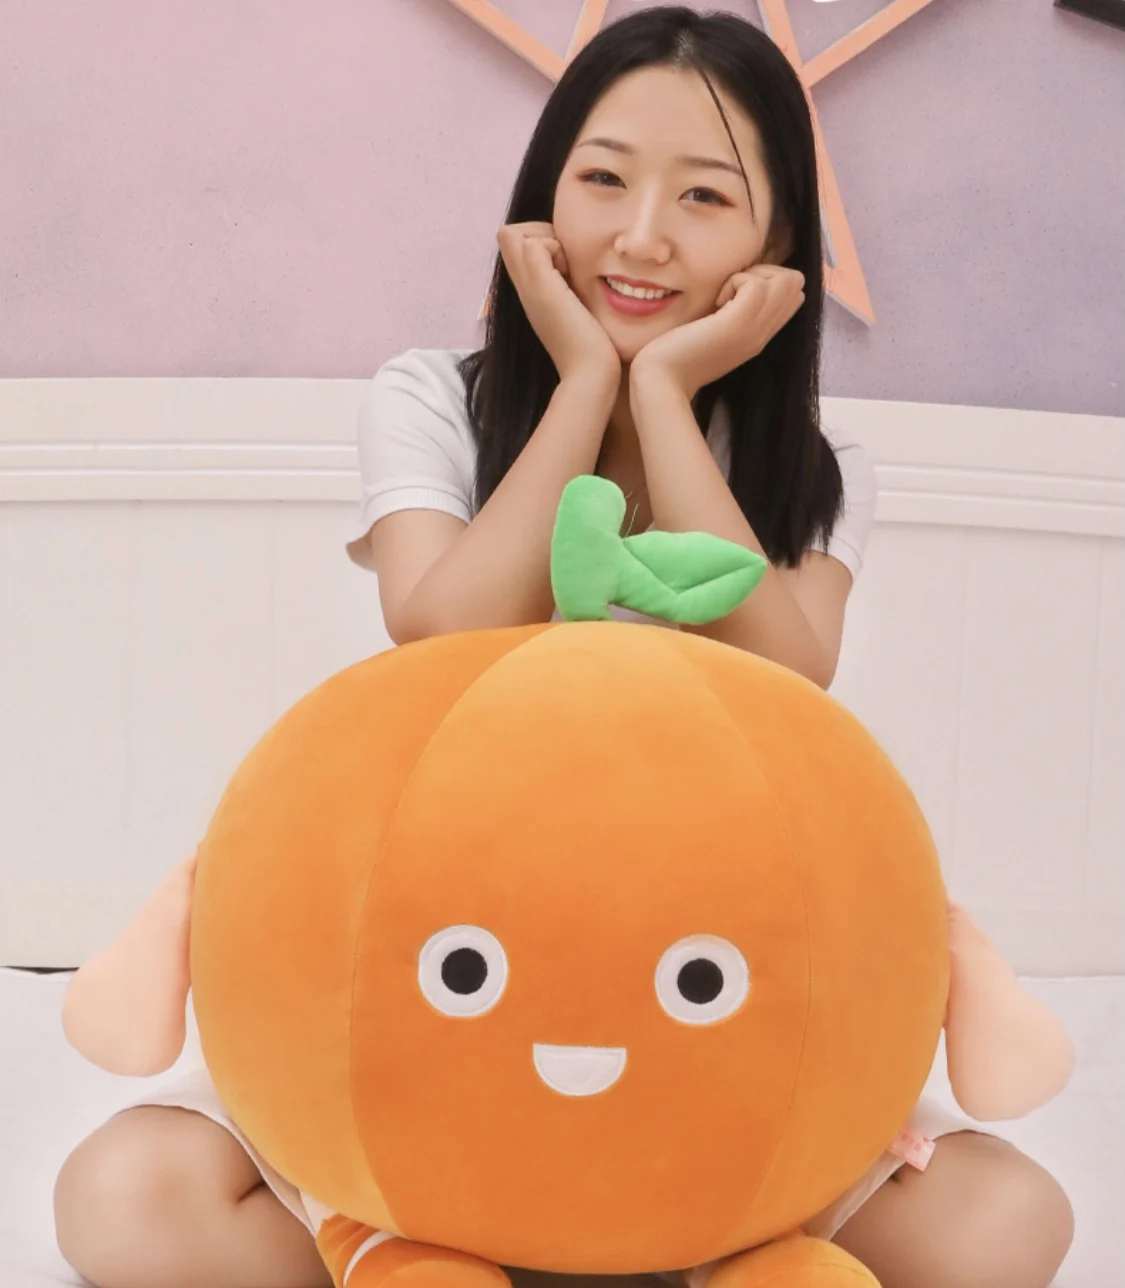 Sweet Orange Plushie Doll | Cartoon Smiling Face Fruit Plush Toy -9